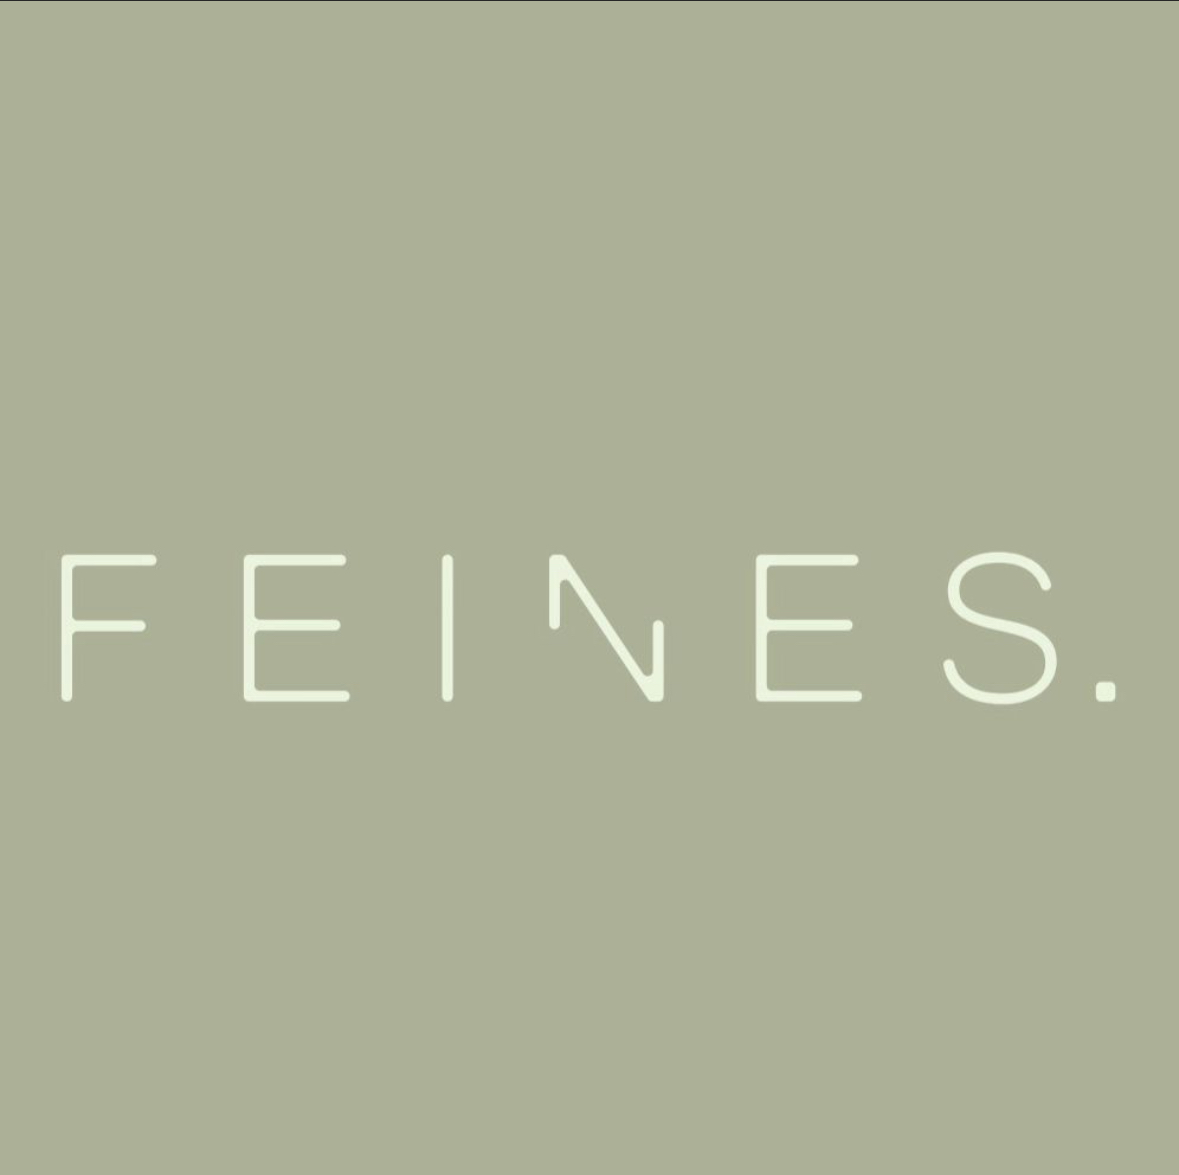 Feines Logo